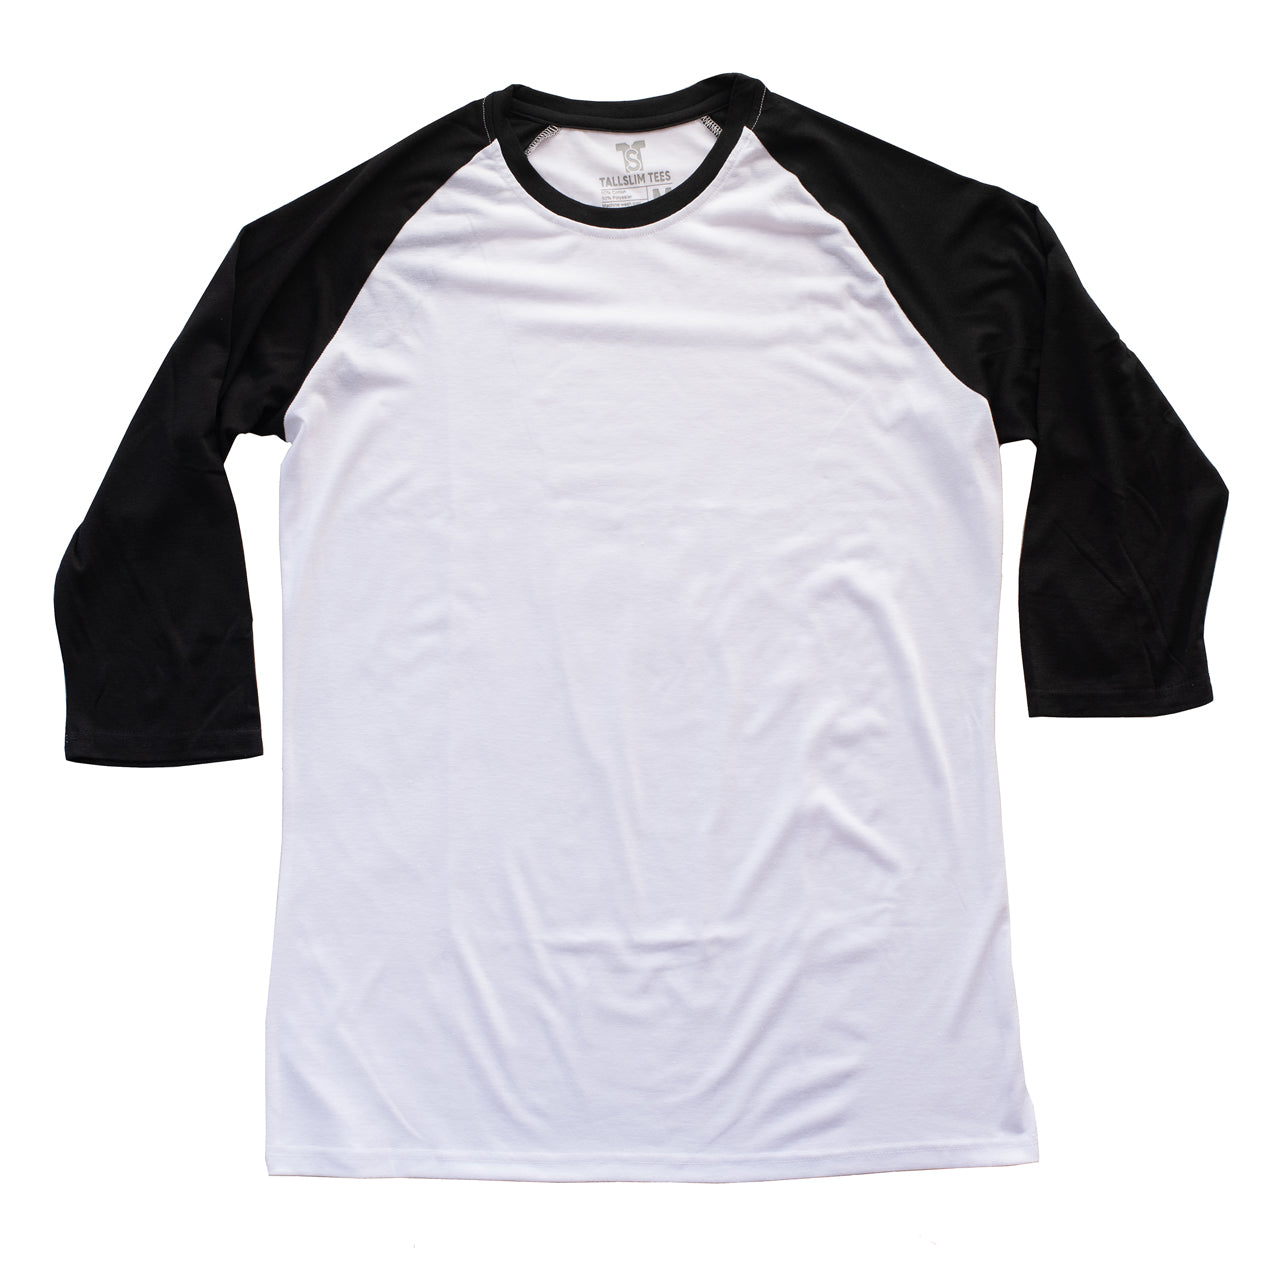 White and Black Raglan 3/4 Sleeve Shirt For Tall Slim Men